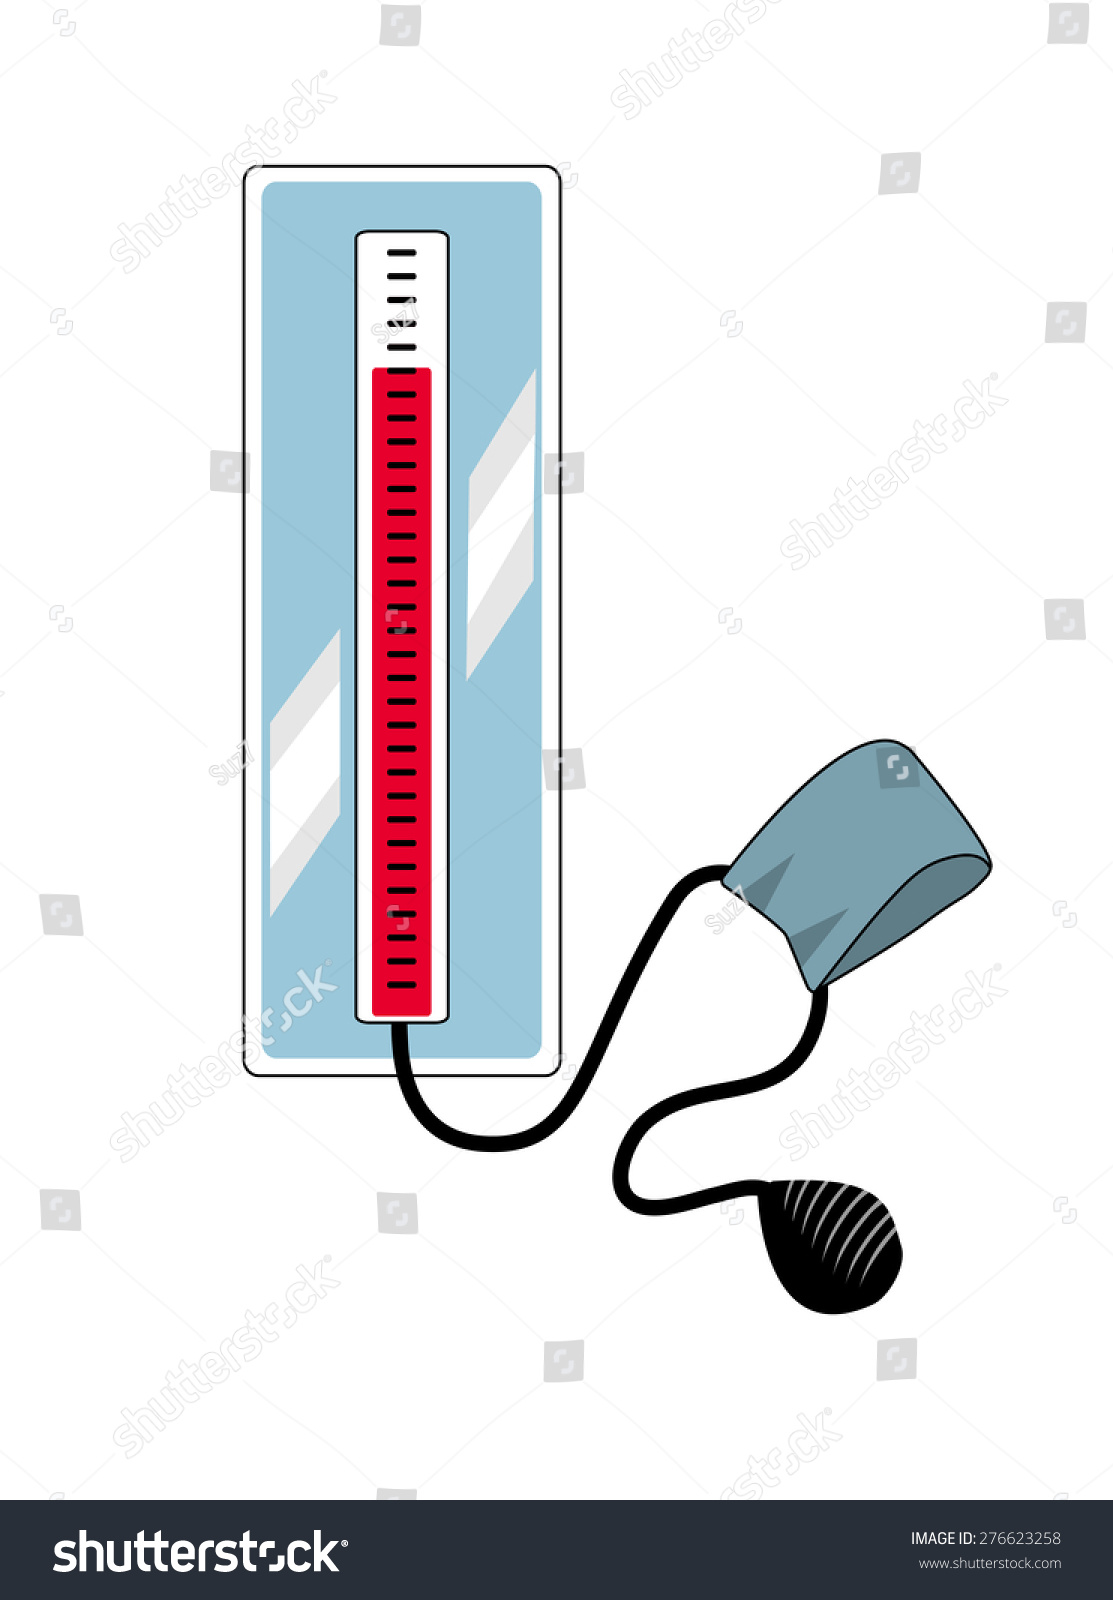 clipart blood pressure machine - photo #45